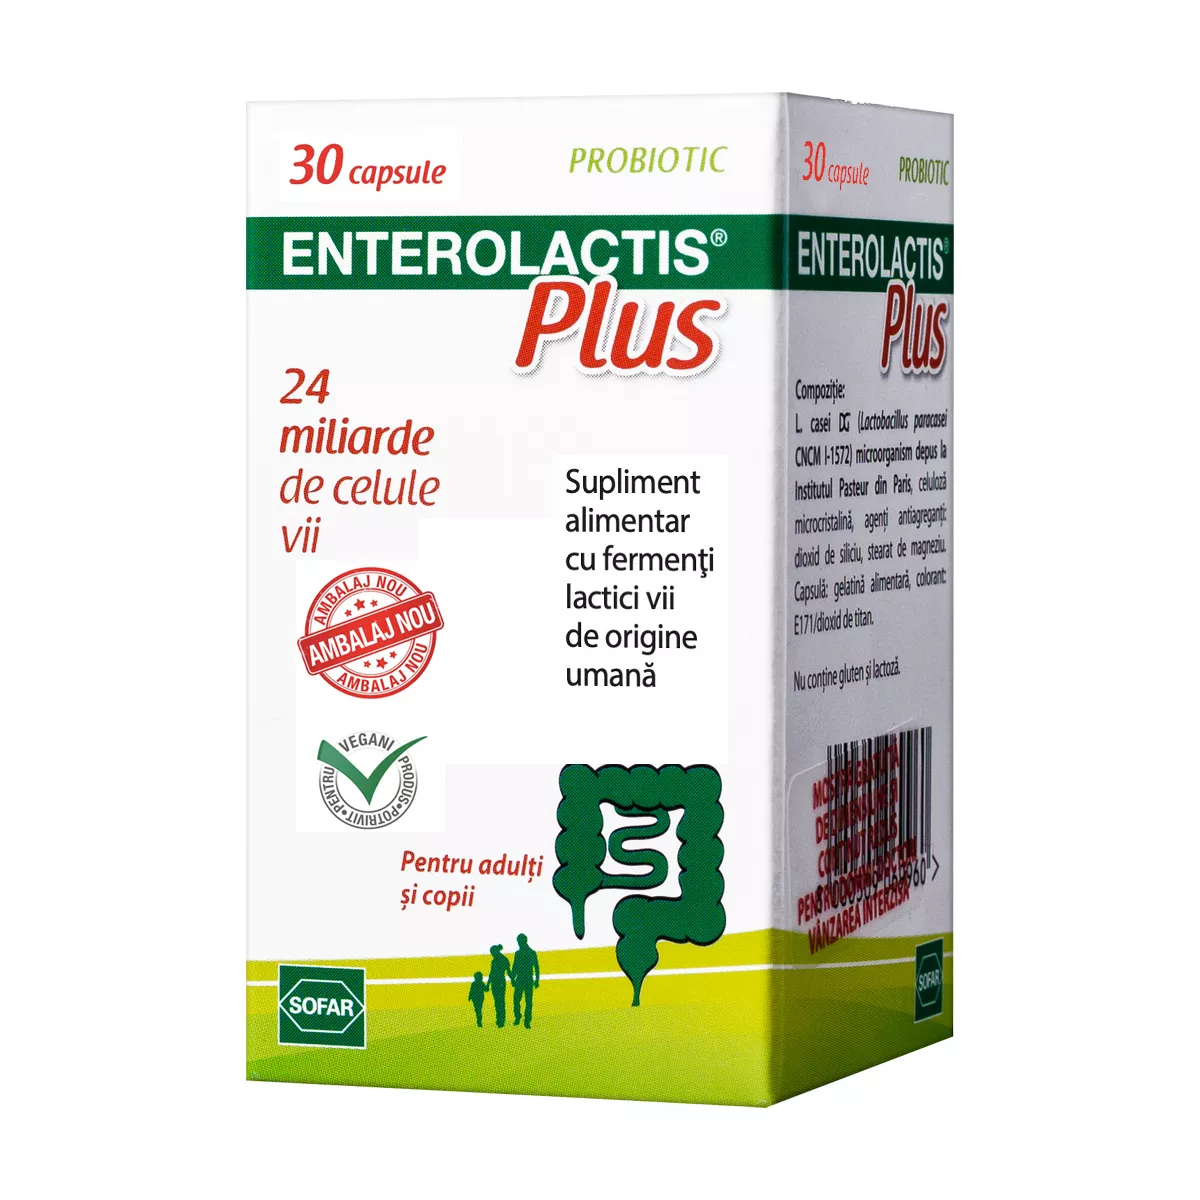 Enterolactis Plus, 30 capsule, Sofar, [],remediumfarm.ro